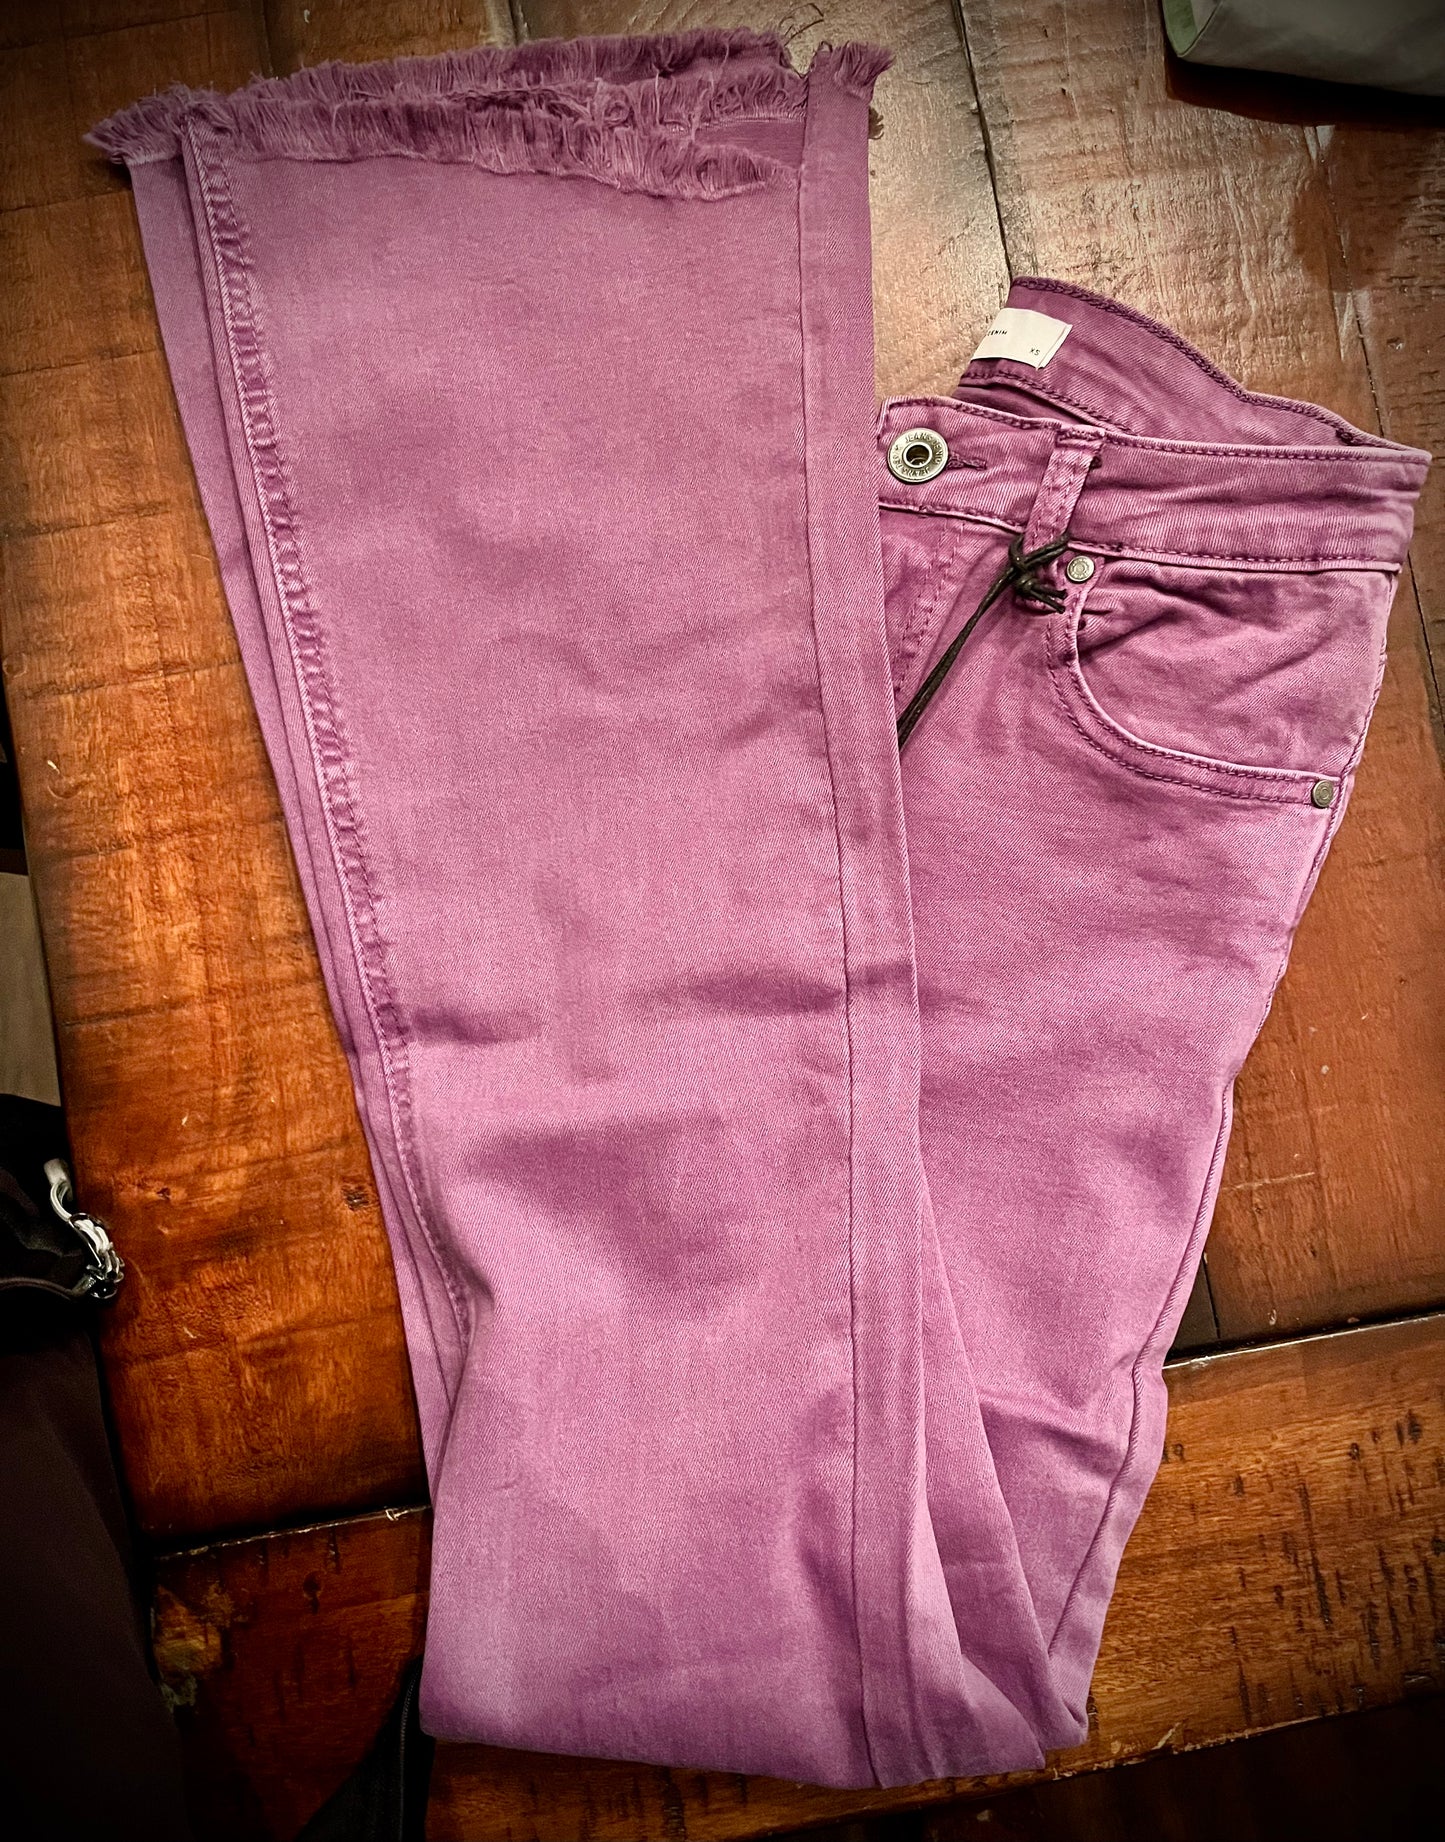 Purple Flare jeans with raw hem edge